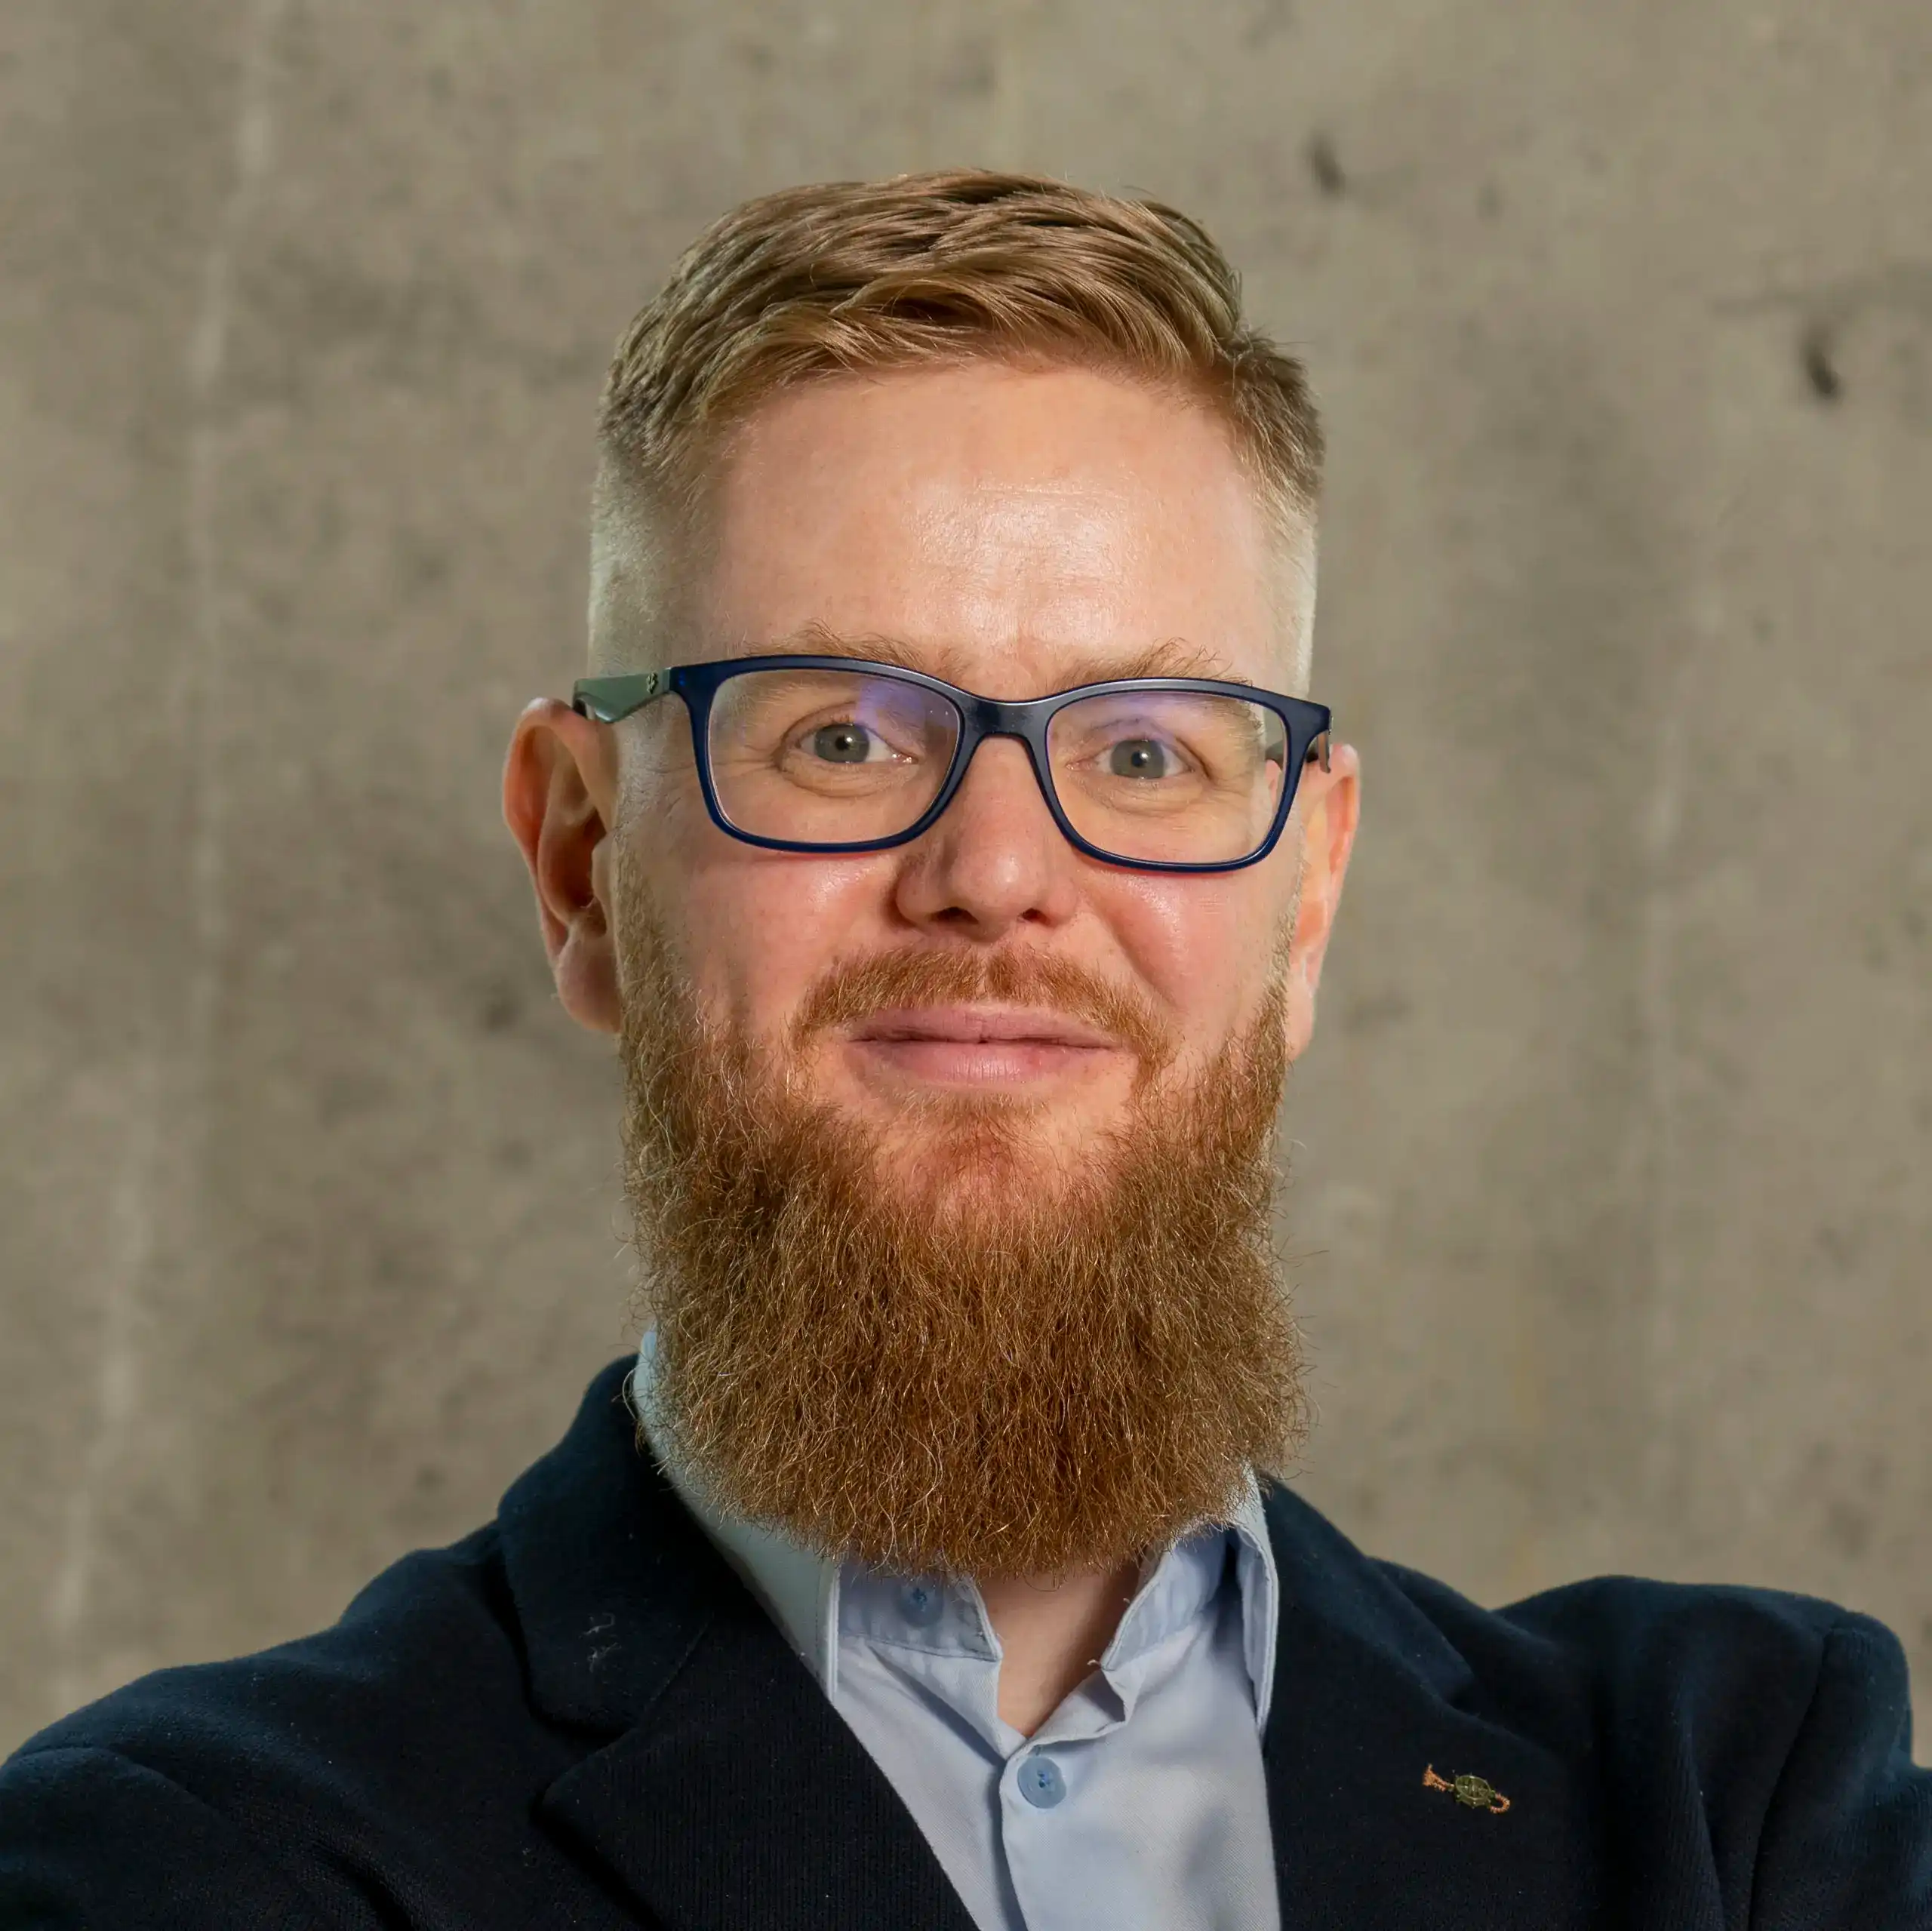 Wojtek Henszke - Modino Software Engineer profile image